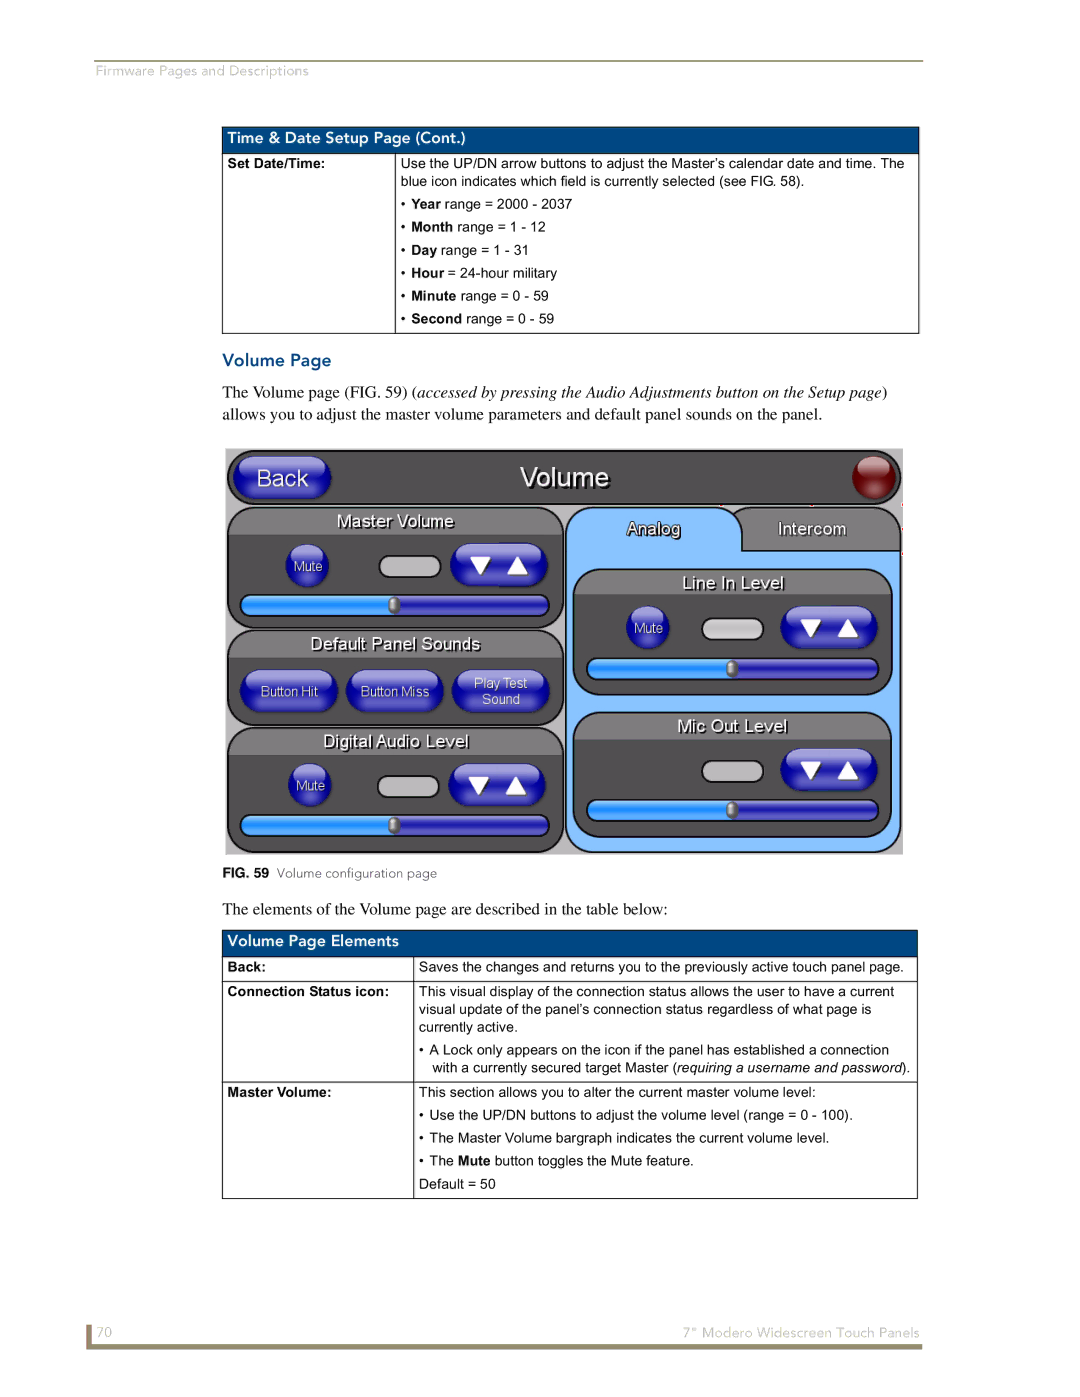 AMX NXD-700Vi manual Volume Page Elements, Set Date/Time, Master Volume 